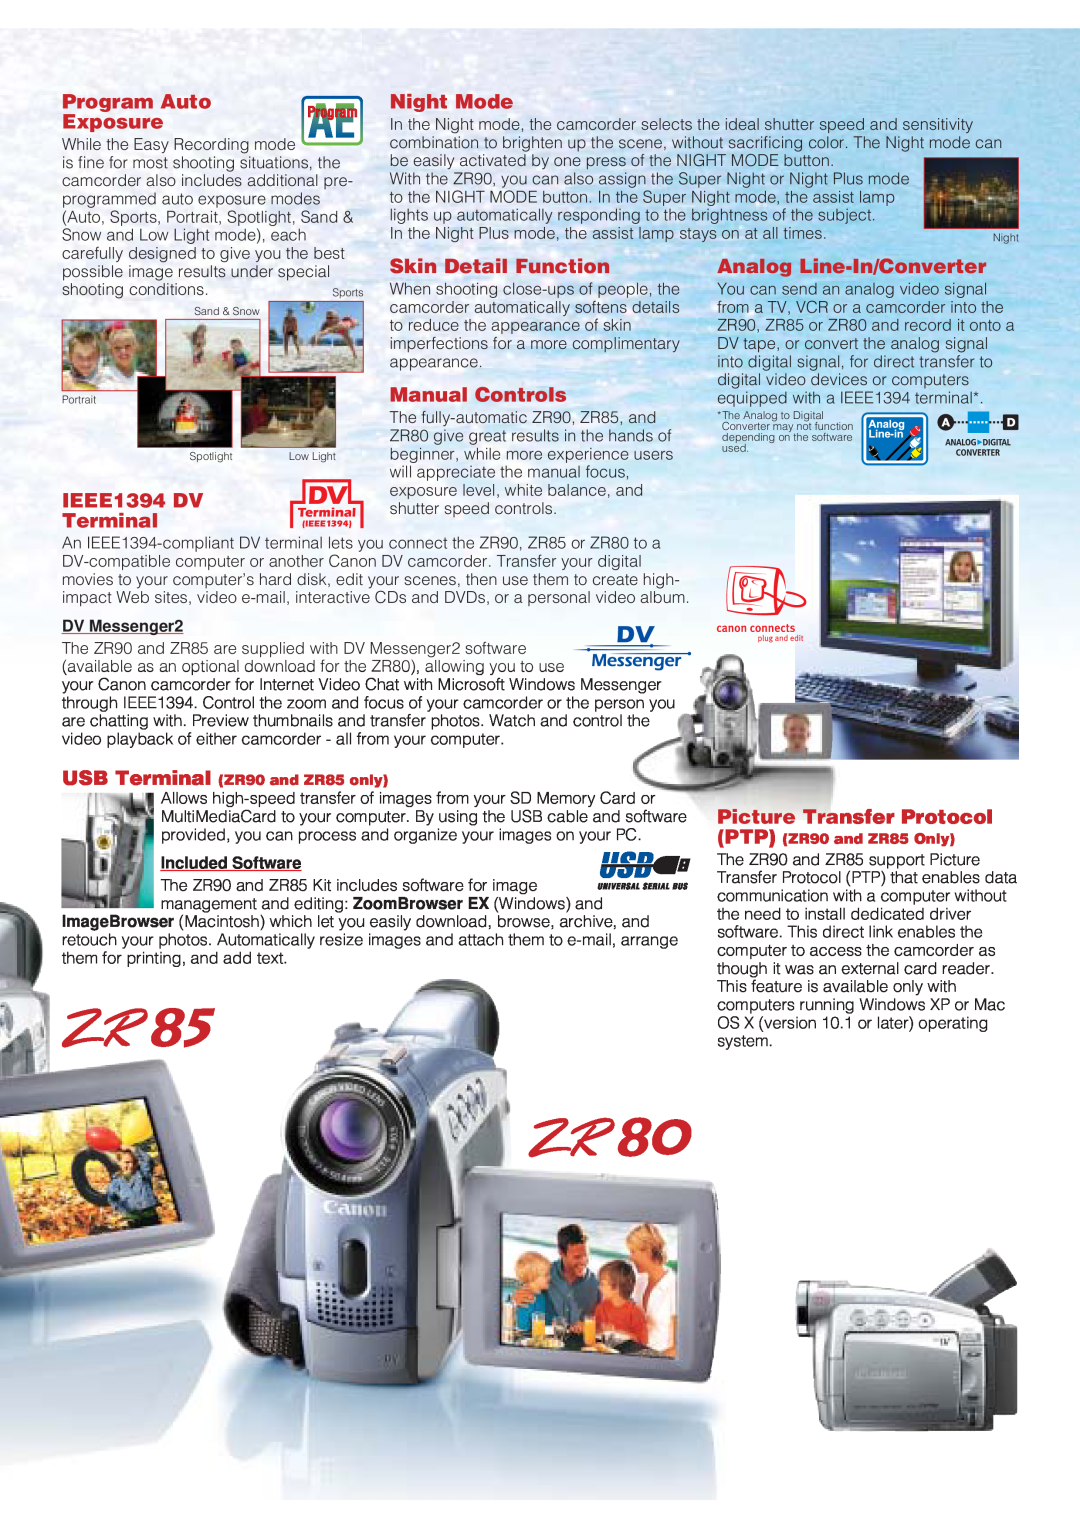 Canon ZR80 Program Auto, Night Mode, IEEE1394 DV Terminal, Skin Detail Function, Manual Controls, Analog Line-In/Converter 